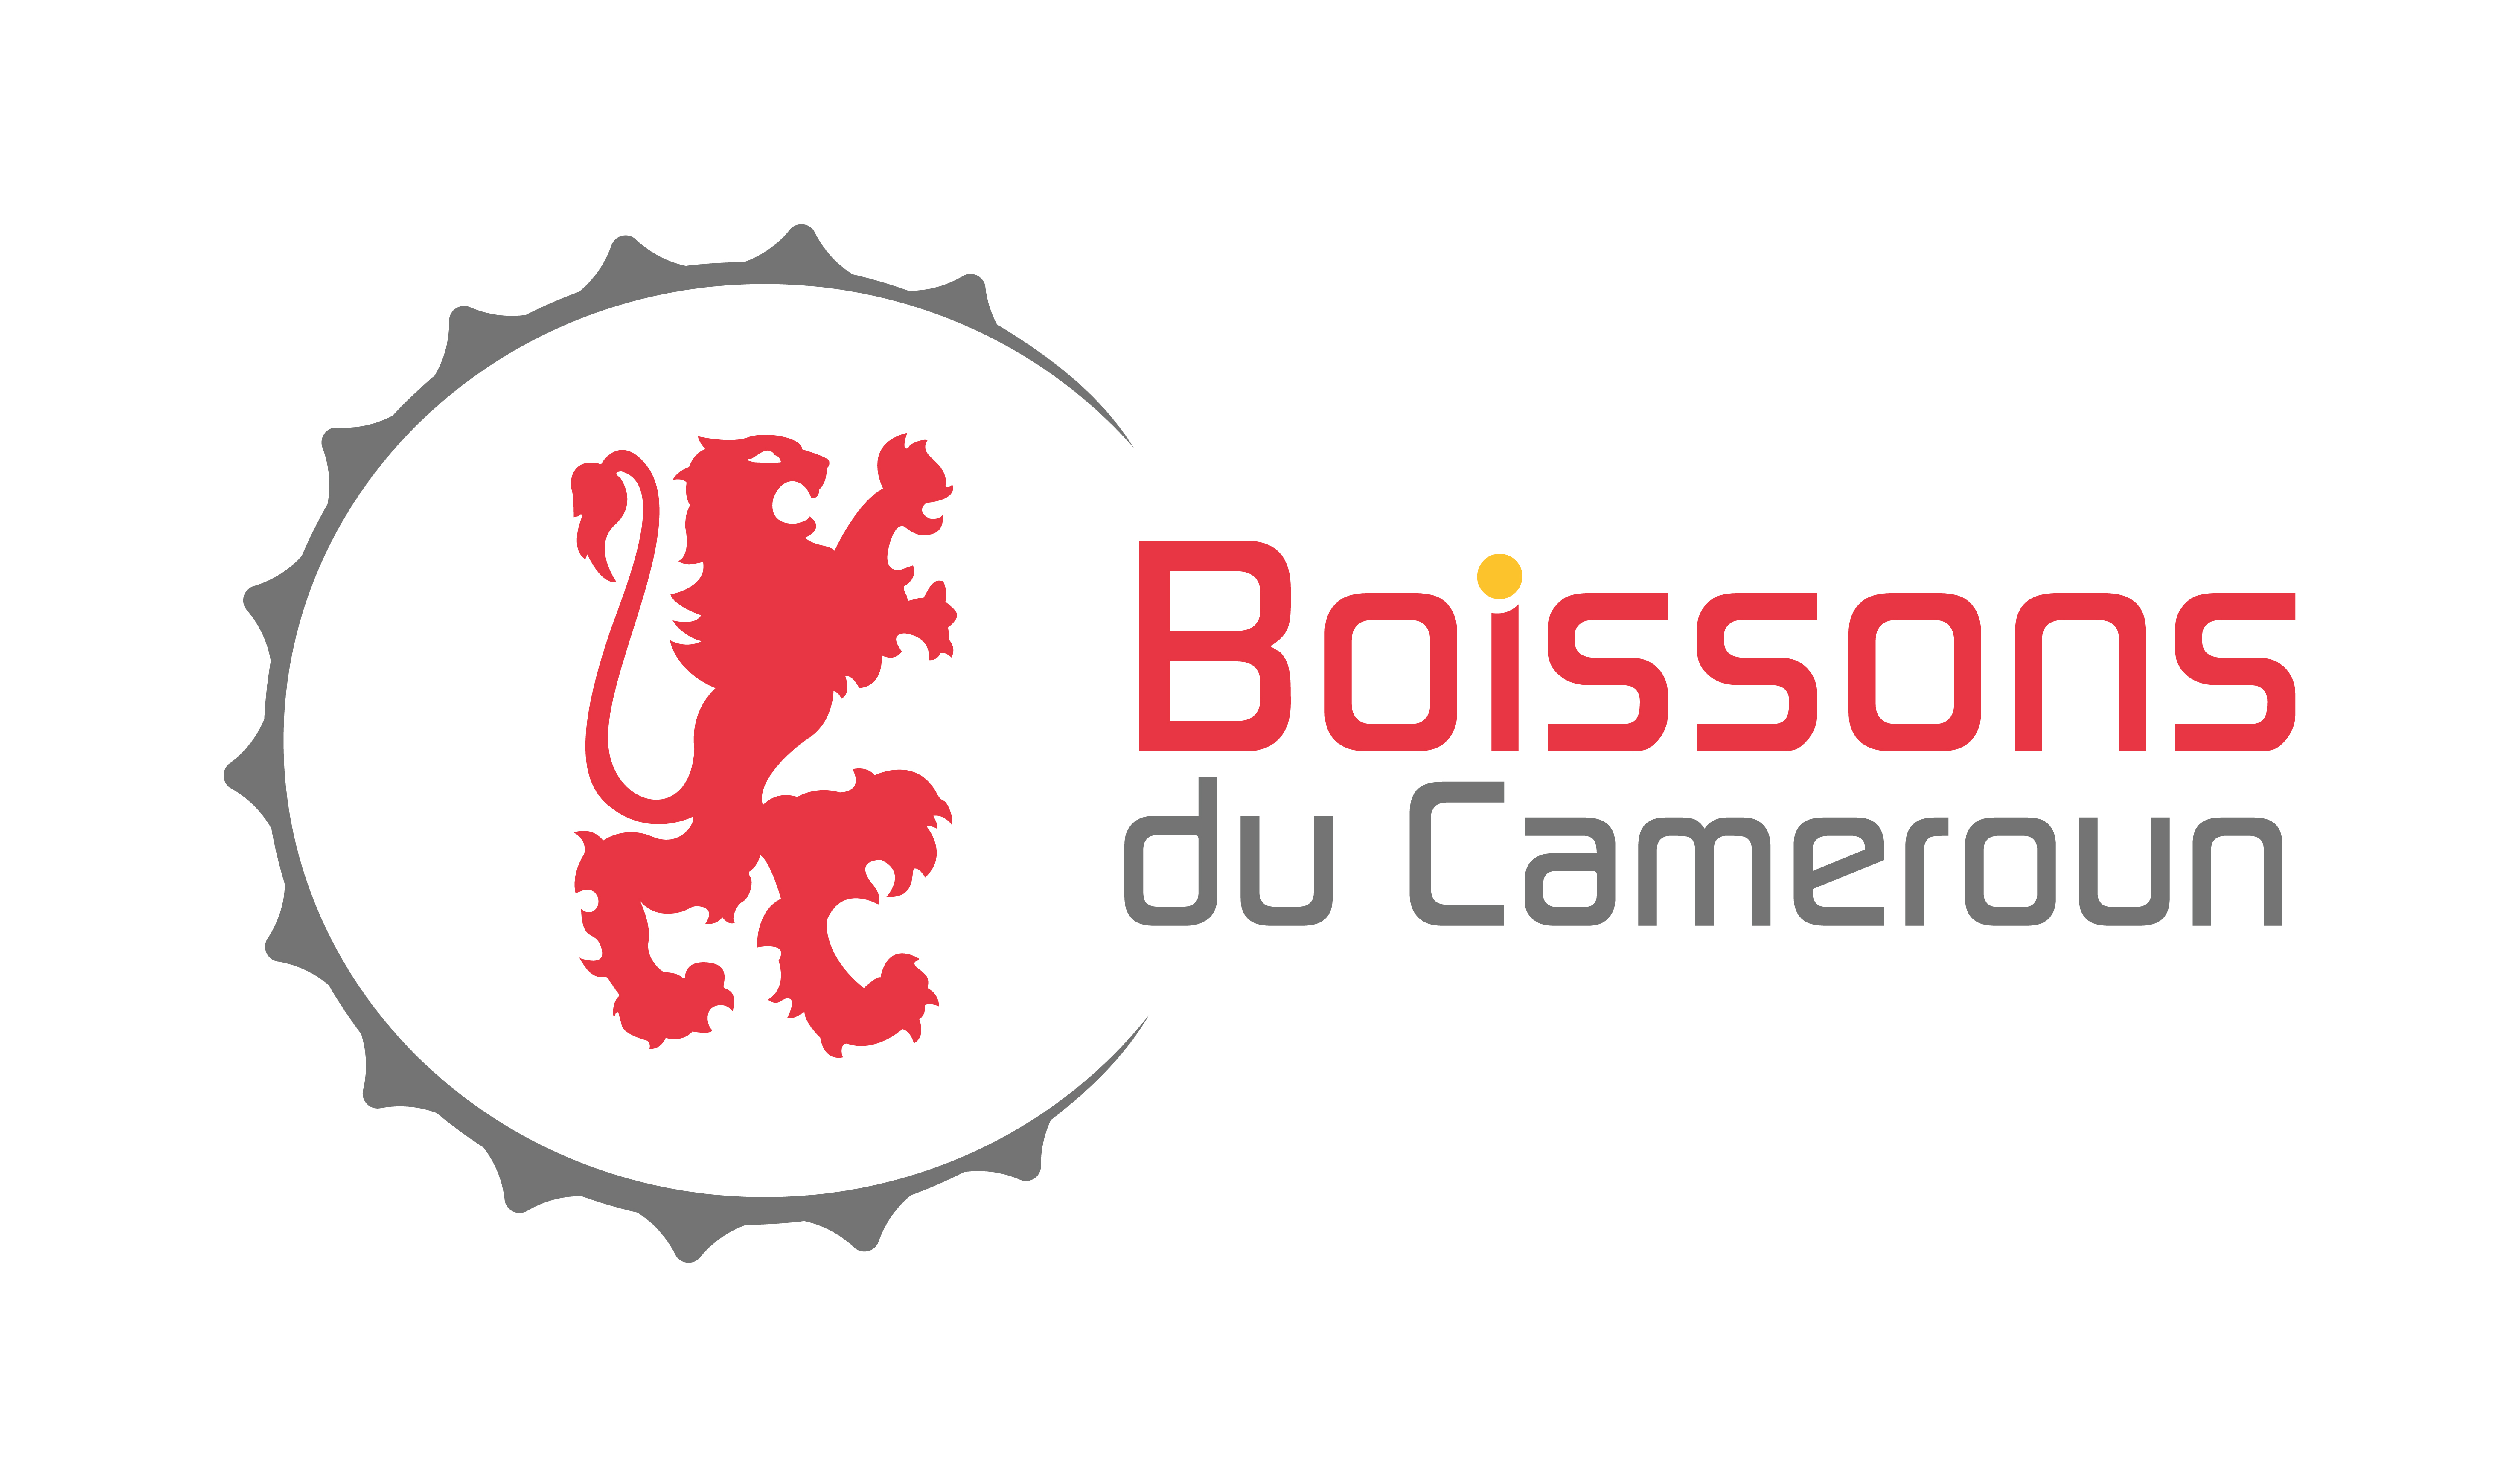 Les Boissons du Cameroun logo